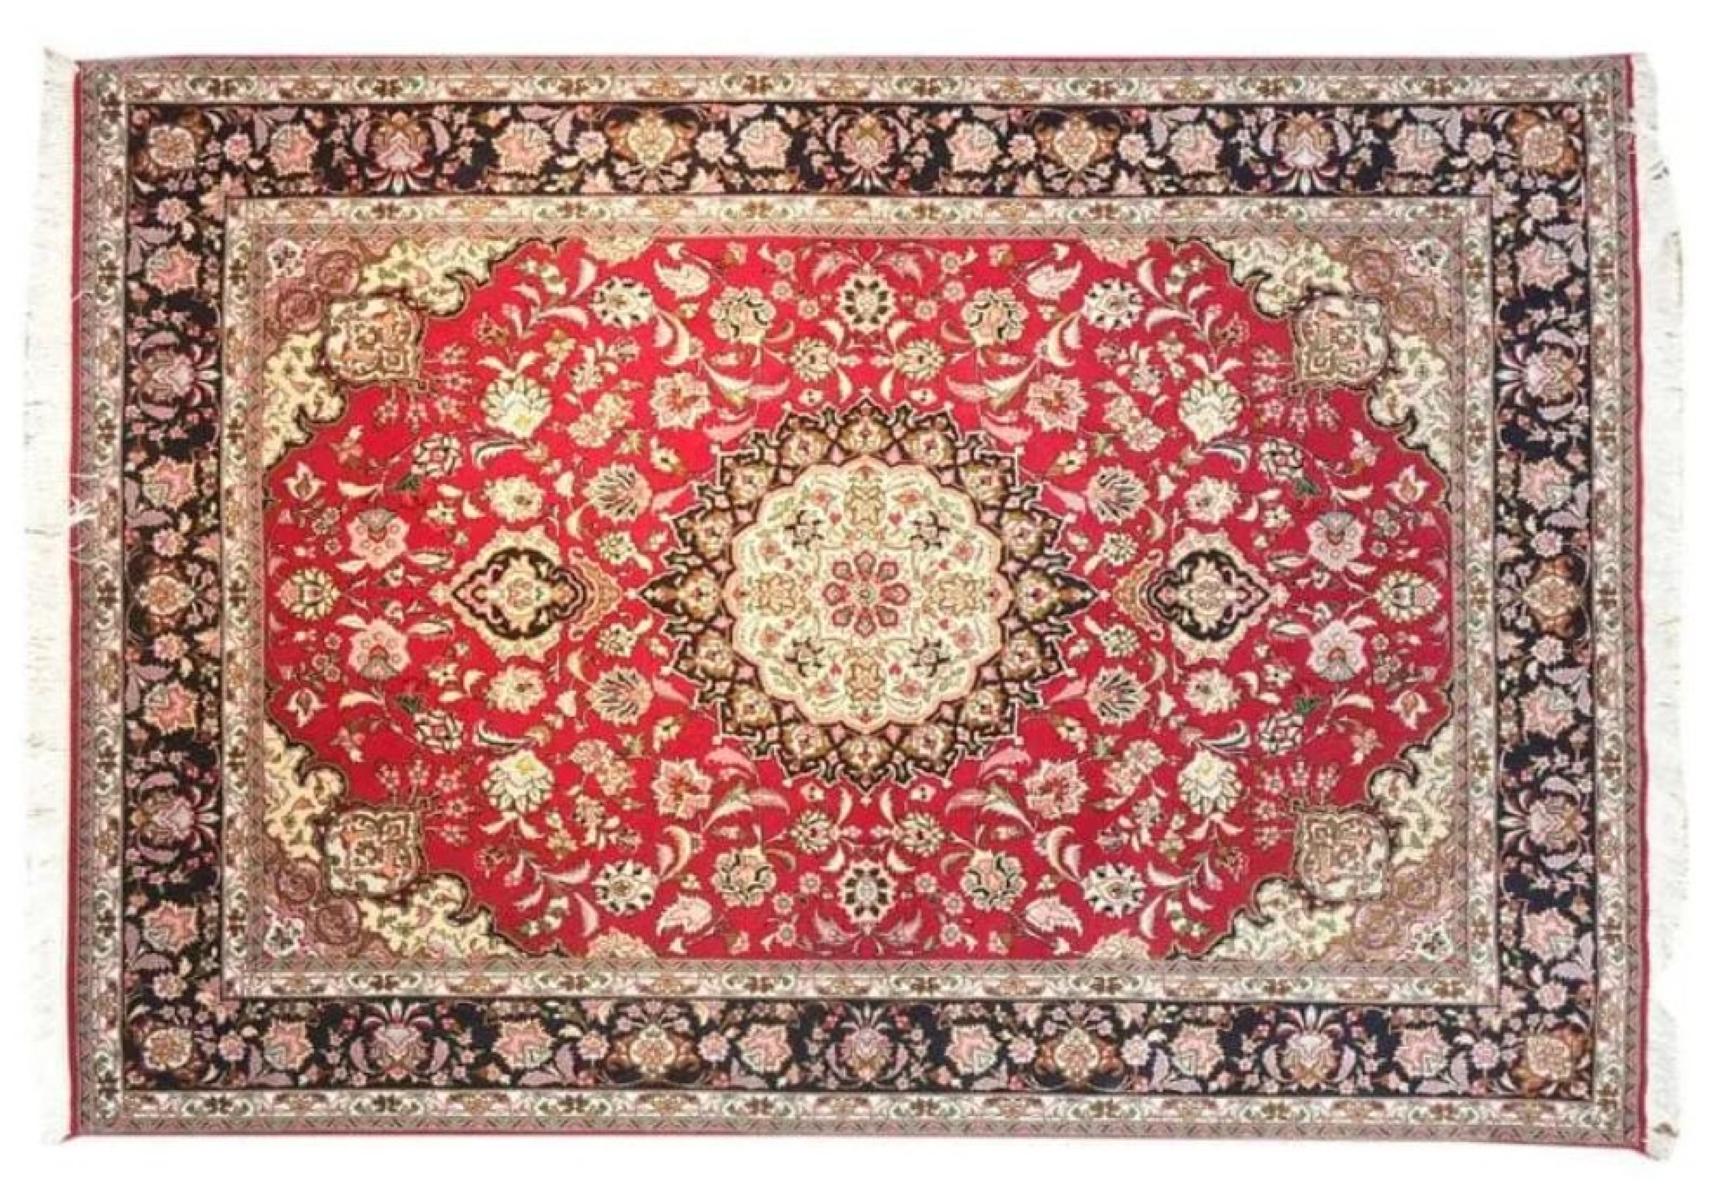 Very fine Persian Tabriz Silk & Wool Rug - 5' x 6.1' For Sale